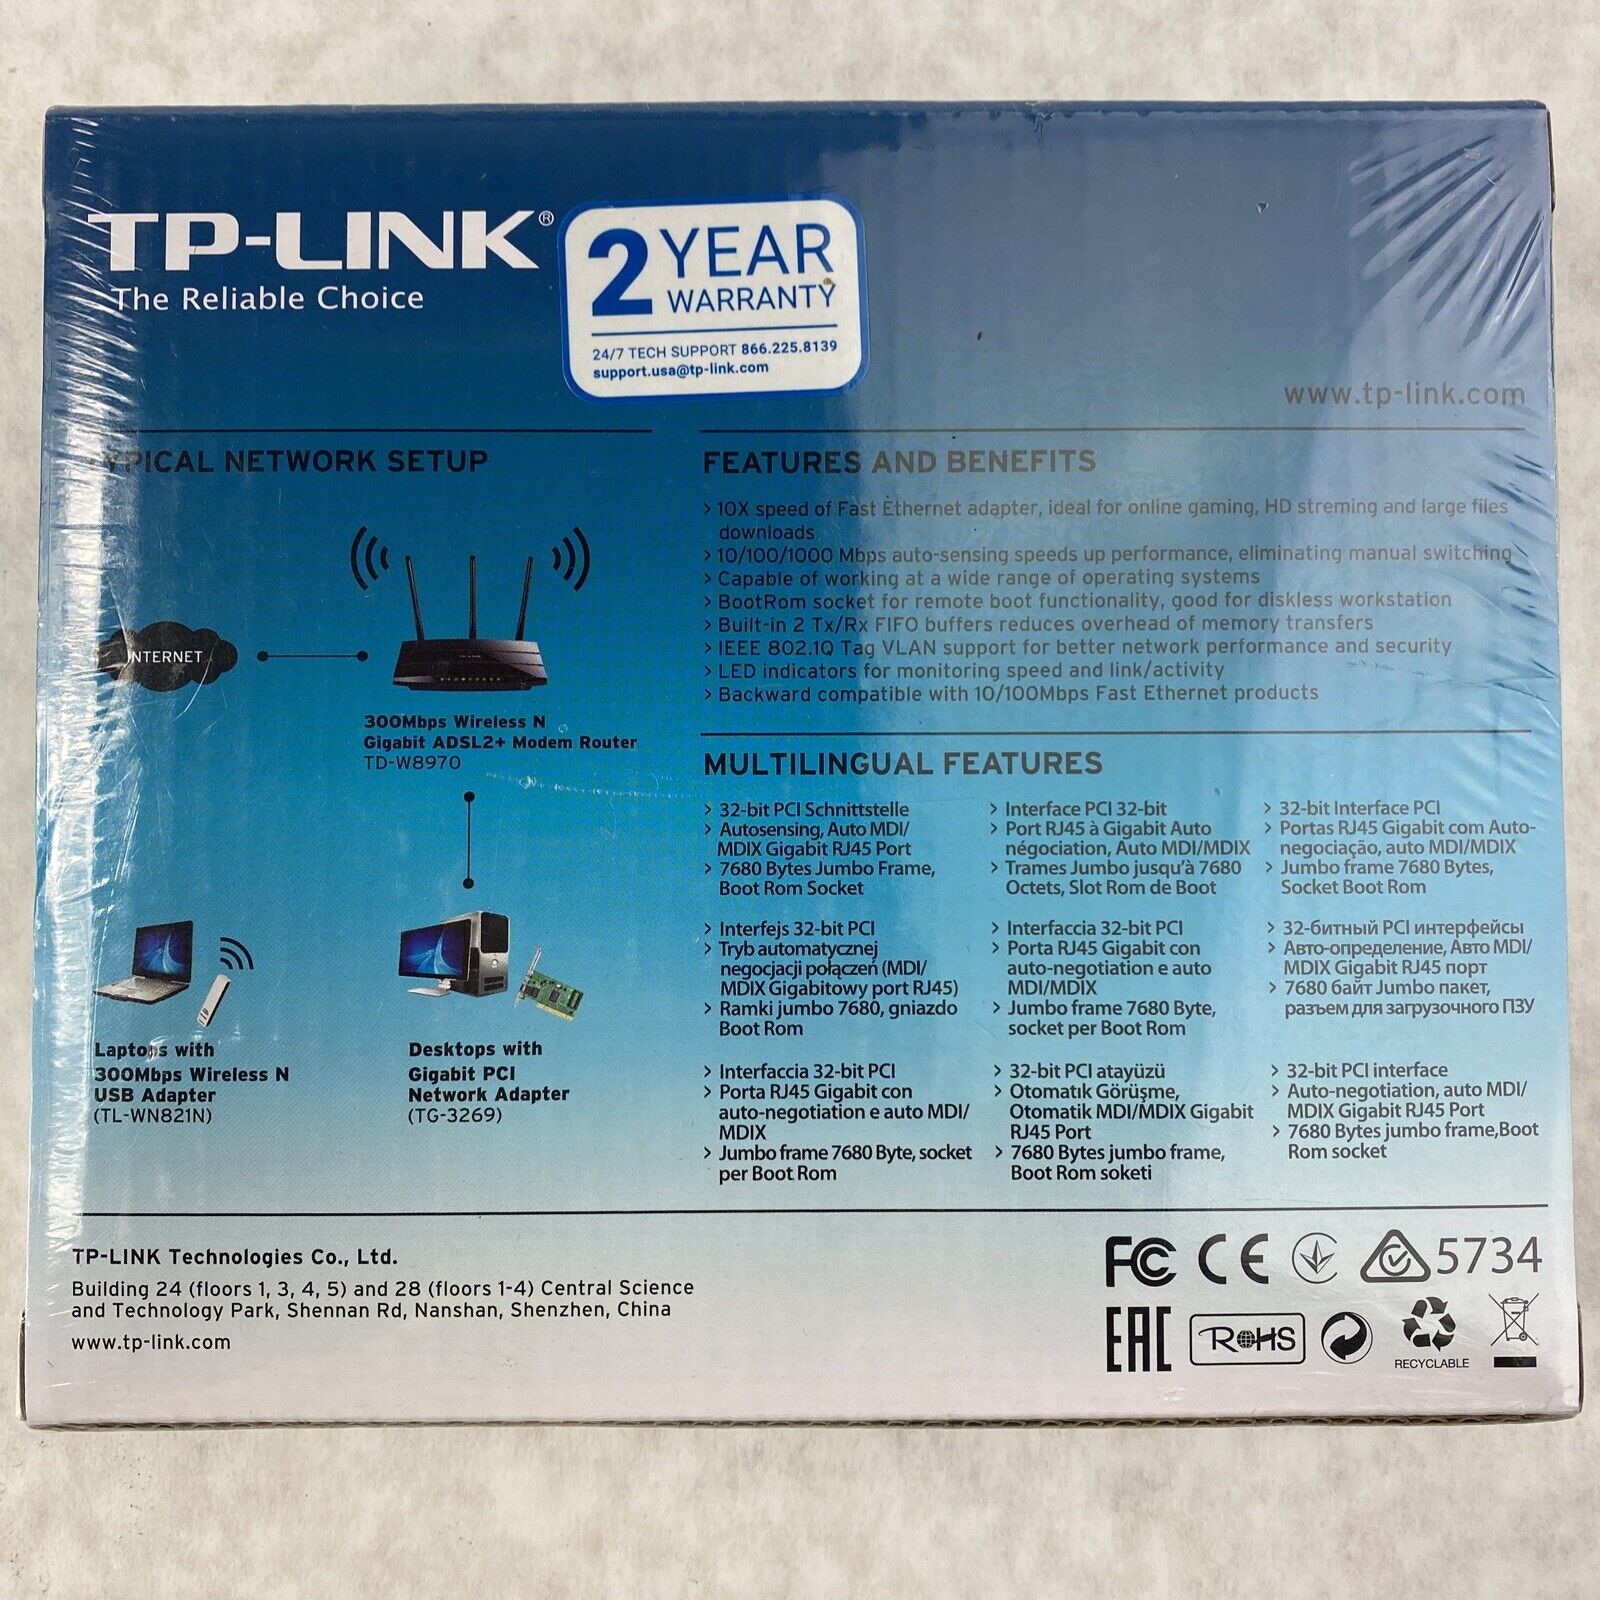 TP-Link Gigabit PCI Network Adapter 1000 Mbps TG-3269. UNOPENED-BRAND NEW